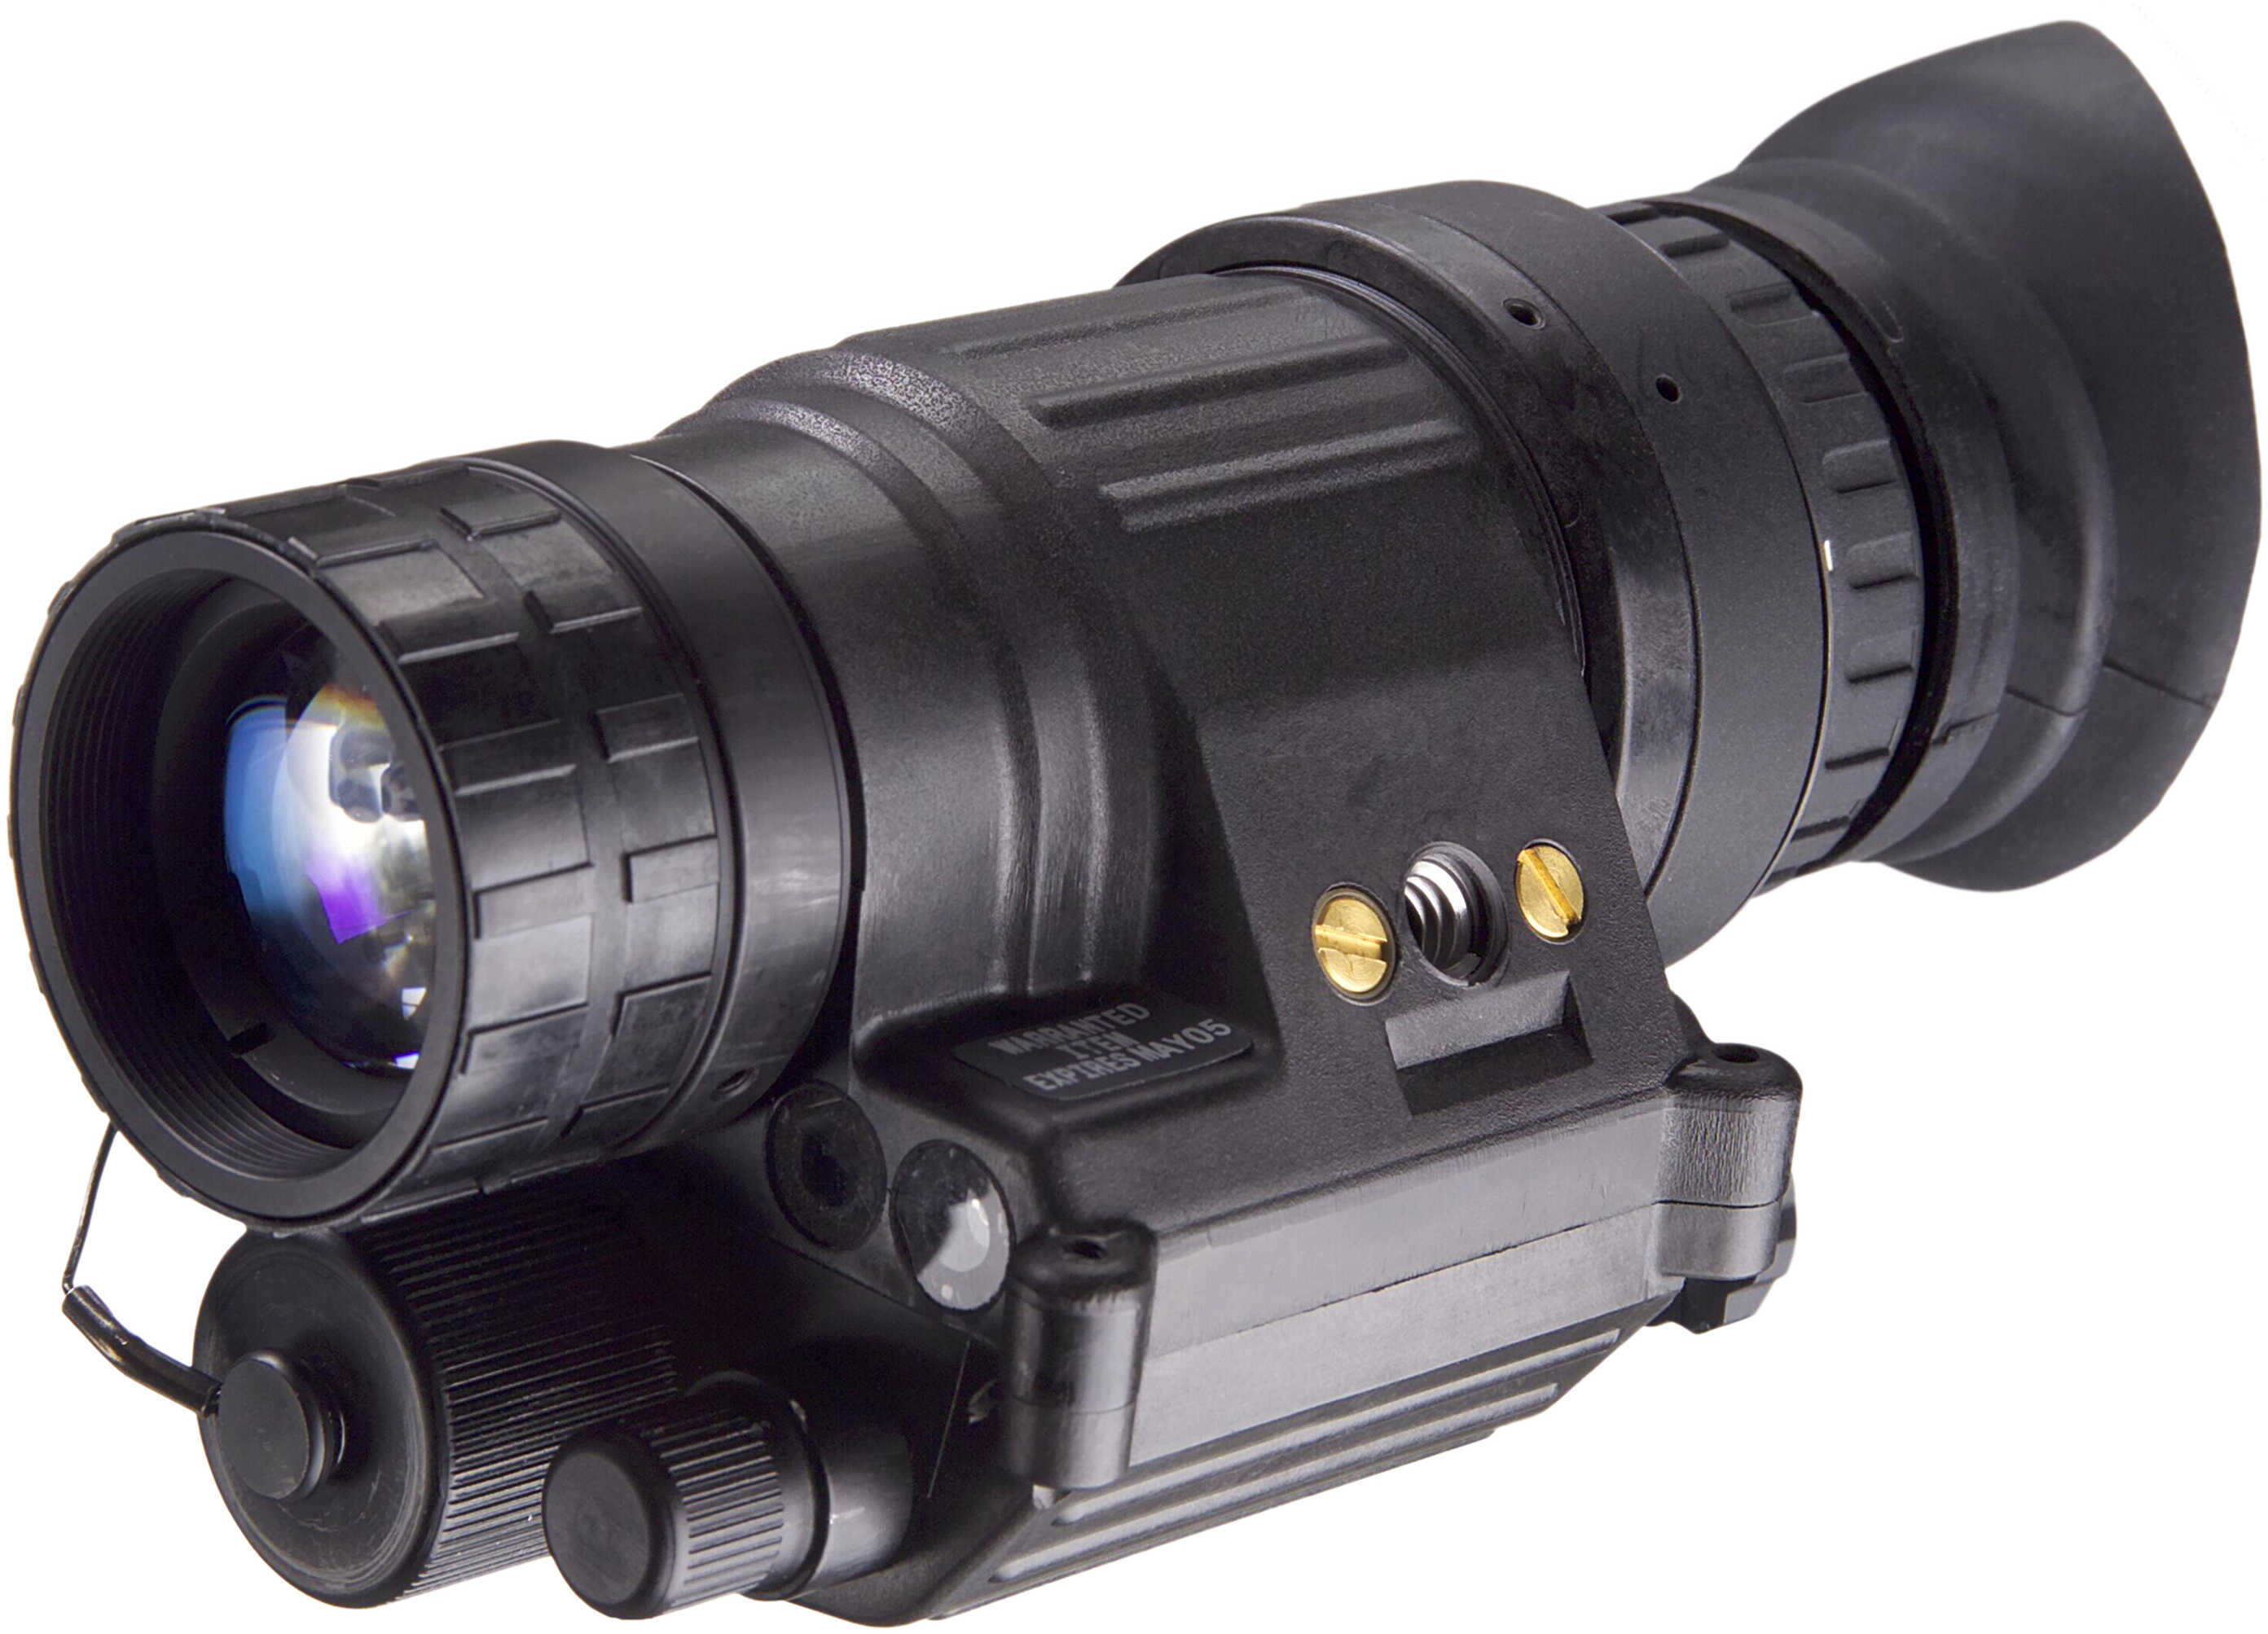 ATN 6015-4 Gen 4 Multi-Purpose Night Vision System Model number NVMP601540